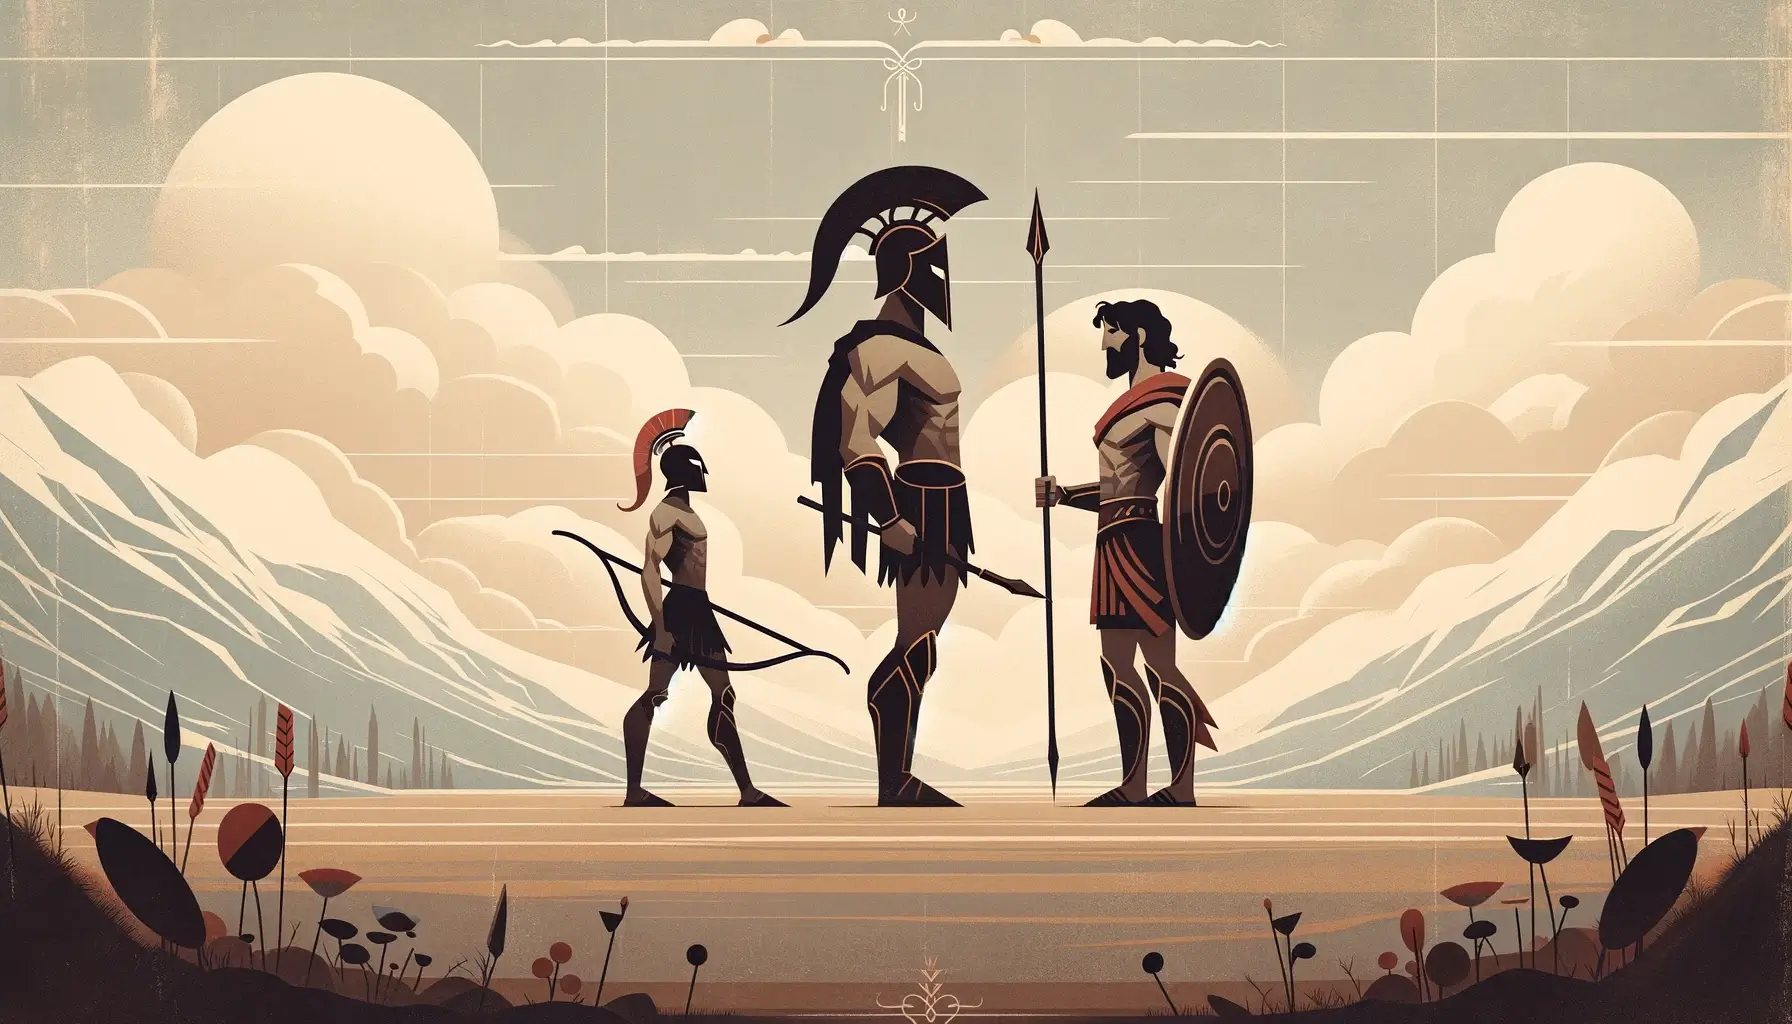 Achilles vs Odysseus: The Warrior vs The Tactician